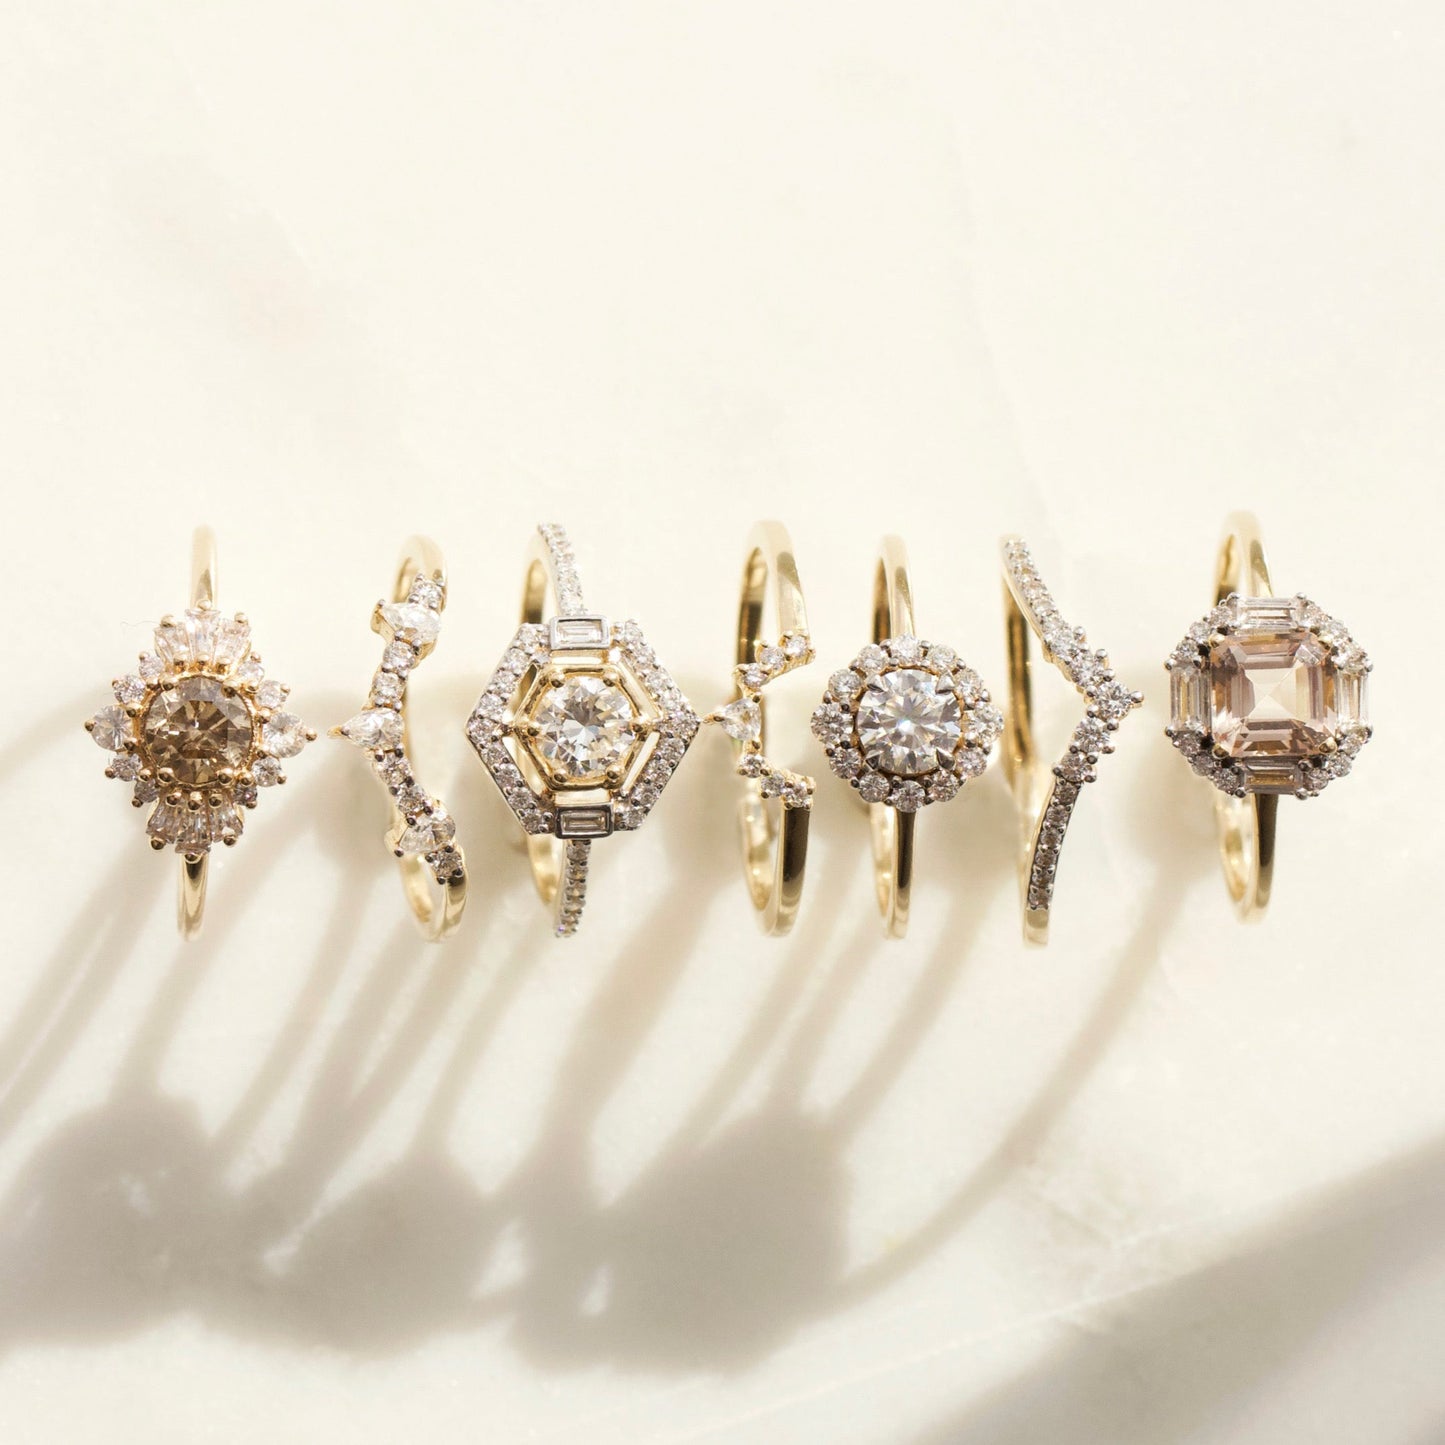 Carrie Elizabeth Solid 14k Gold Diamond Engagement Ring